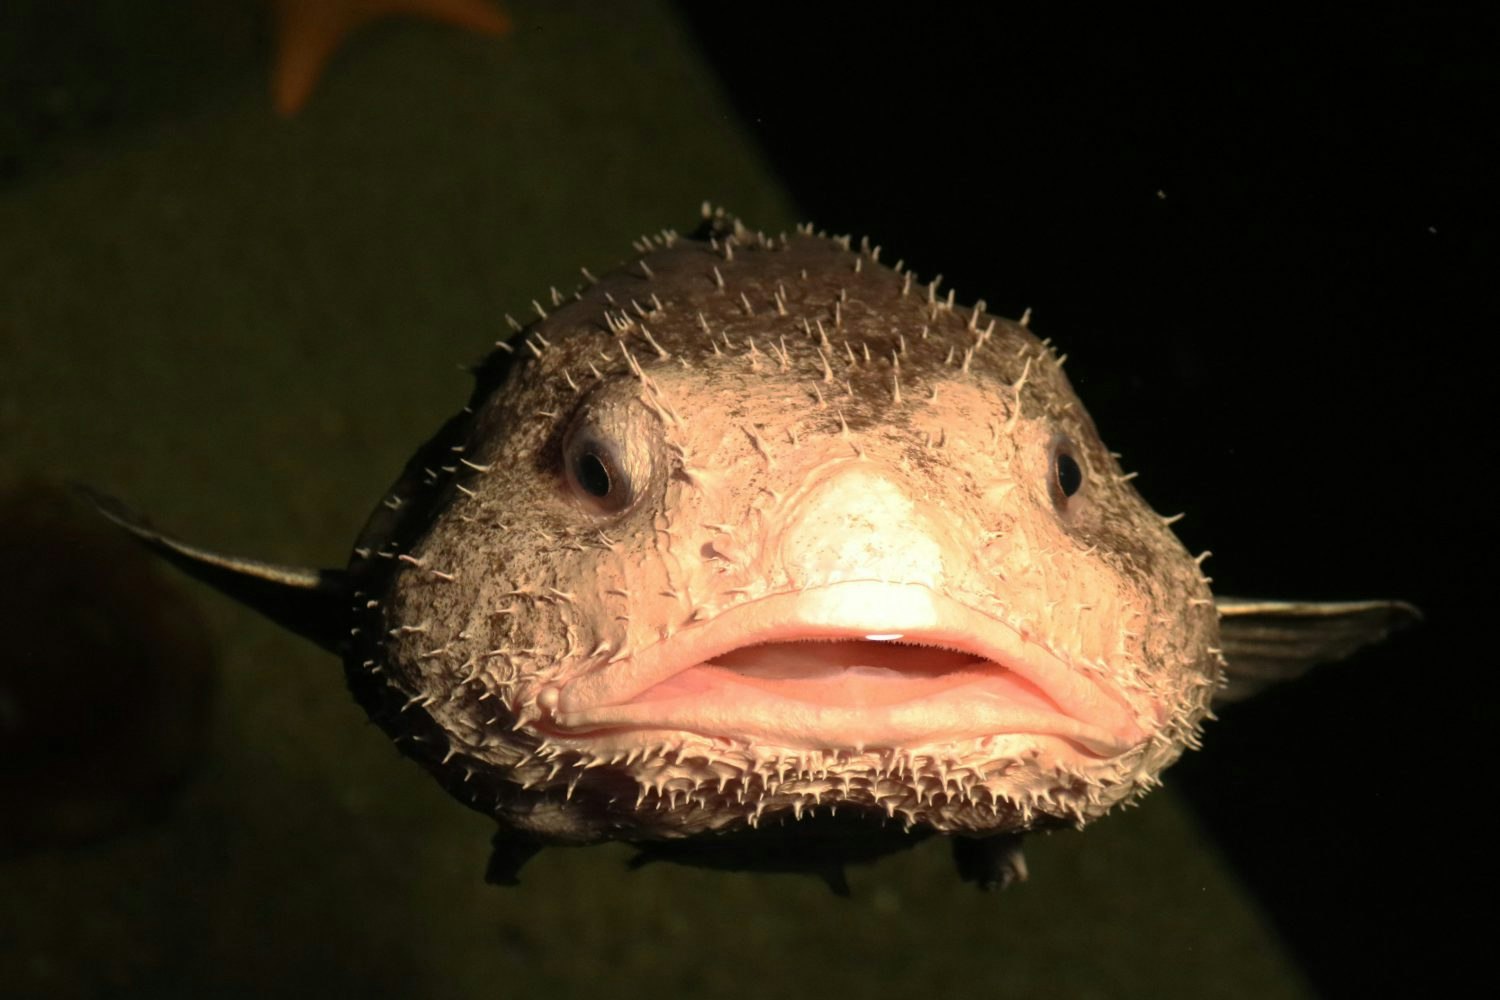 Bob the Blobfish lives in a Japanese aquarium. Image: Aquamarine Fukushima